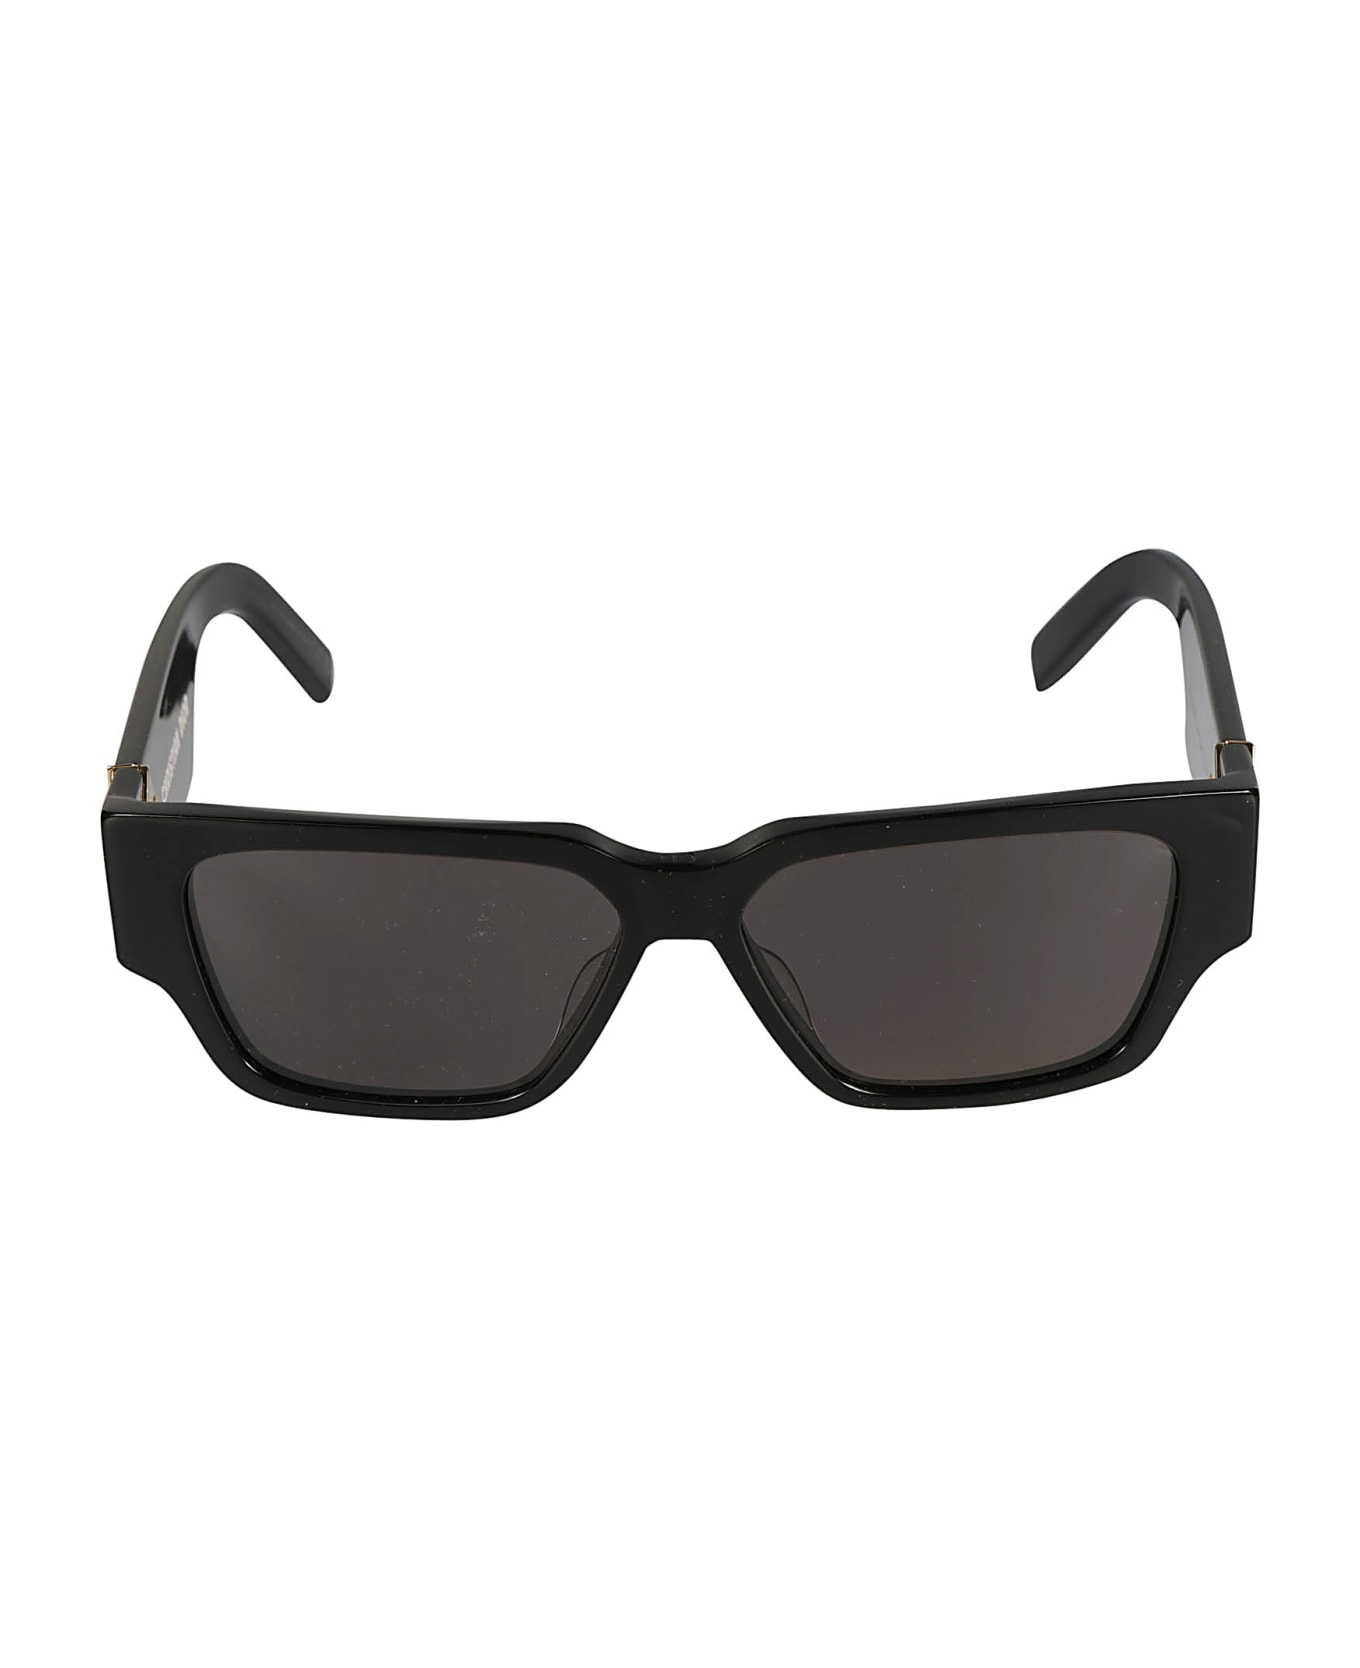 Dior Eyewear Diamond Edition Sunglasses - 10a0